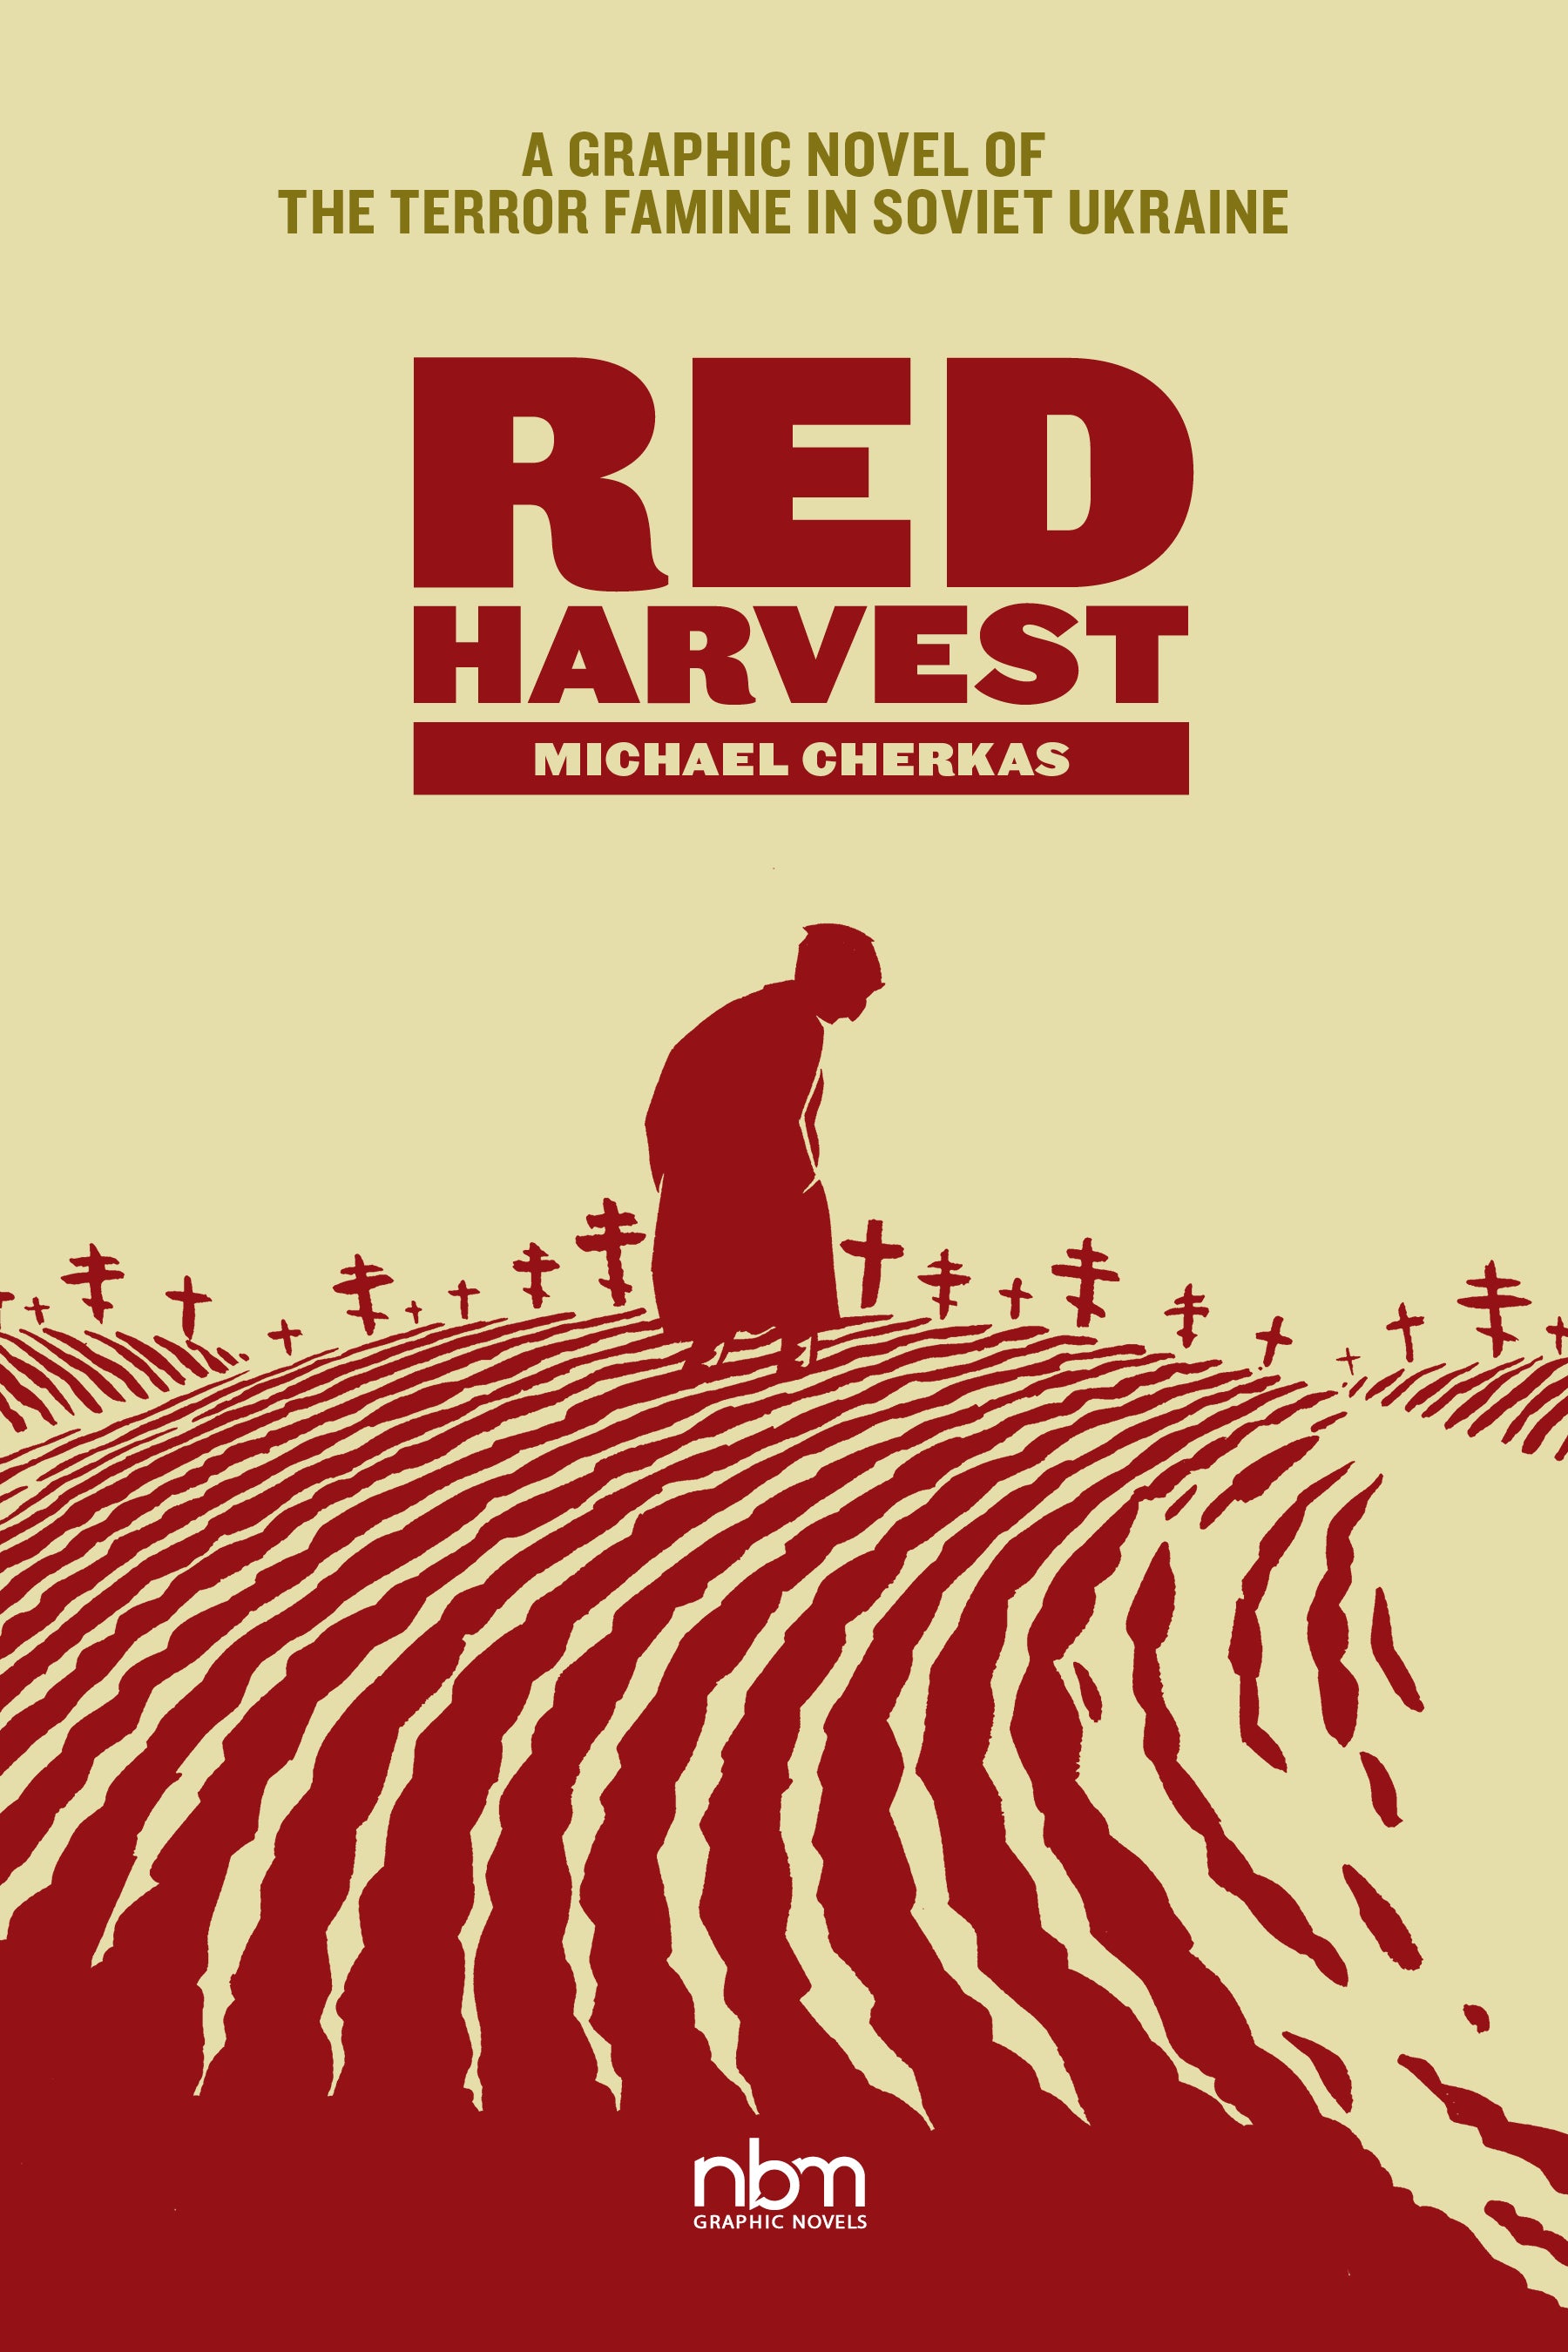 Michael Cherkas signing Red Harvest ARCs at ALA!